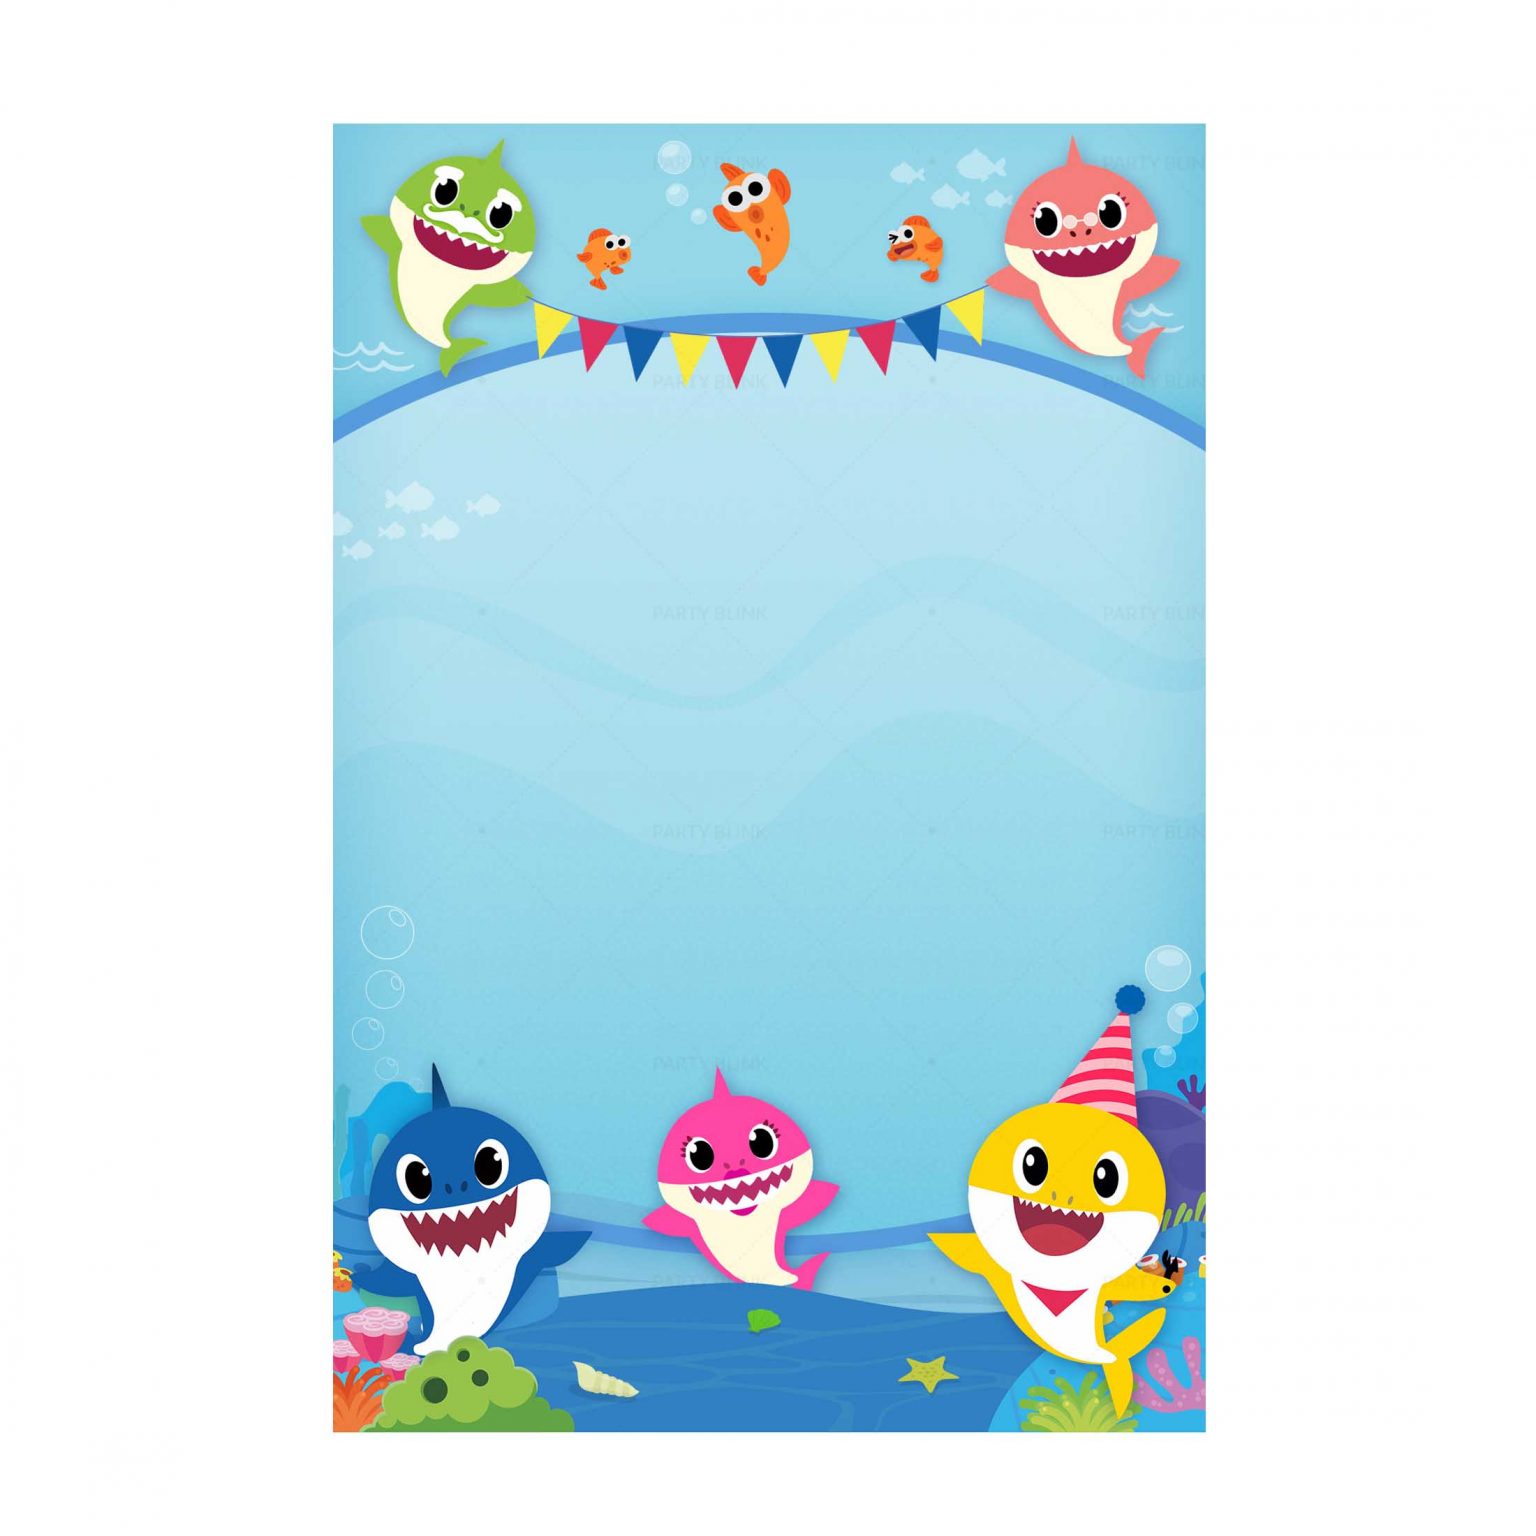 5-baby-shark-invitation-free-low-cost-birthday-templates